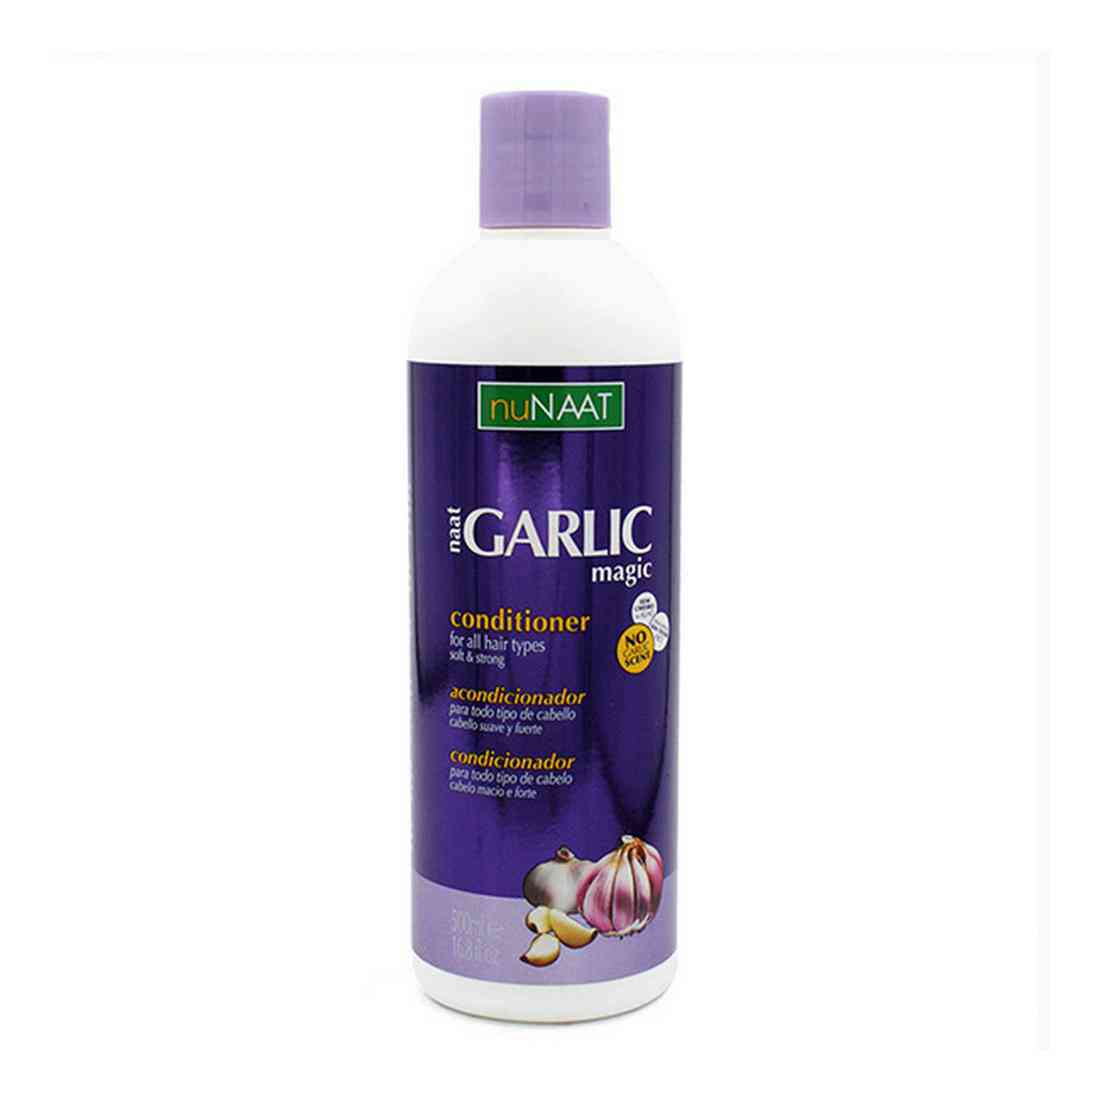 apres shampooing garlic magic nunaat 500 ml